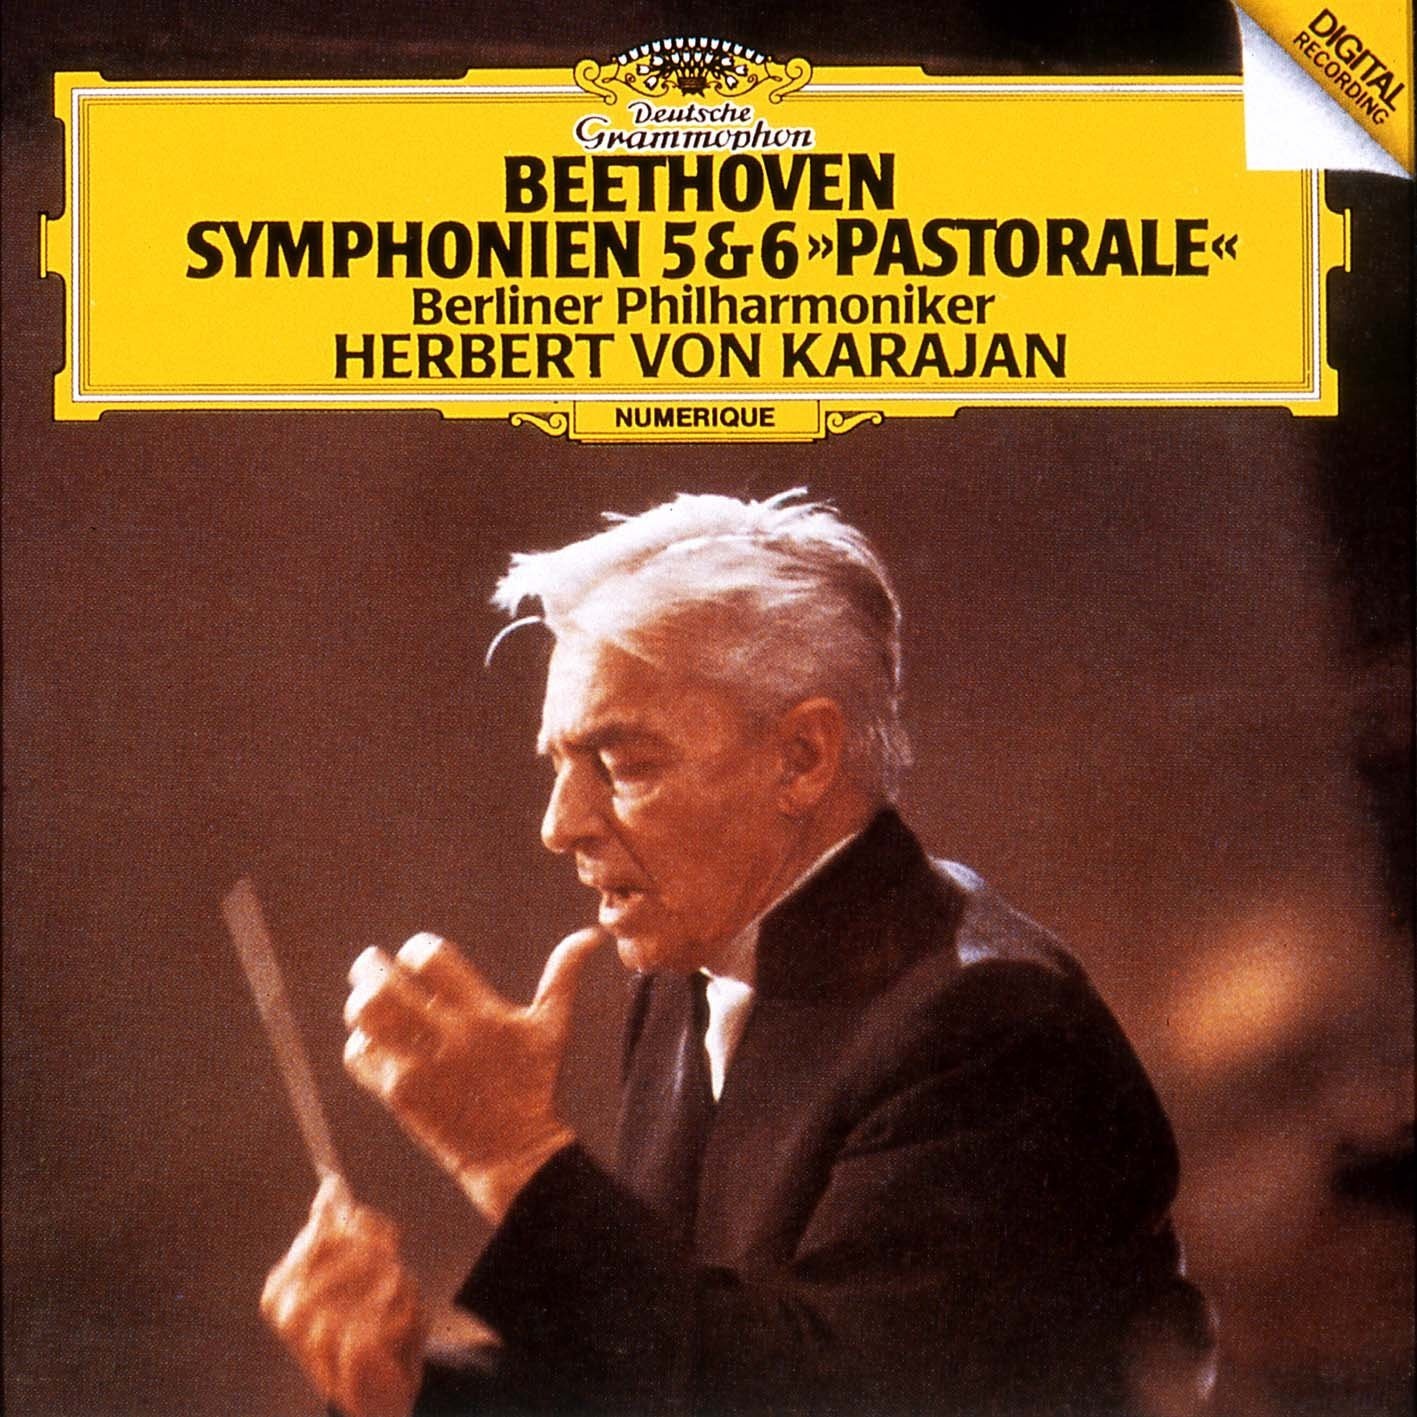 Symphonie Nr. 6 F-dur, op. 68 'Pastorale': IV. Gewitter - Sturm (Allegro)